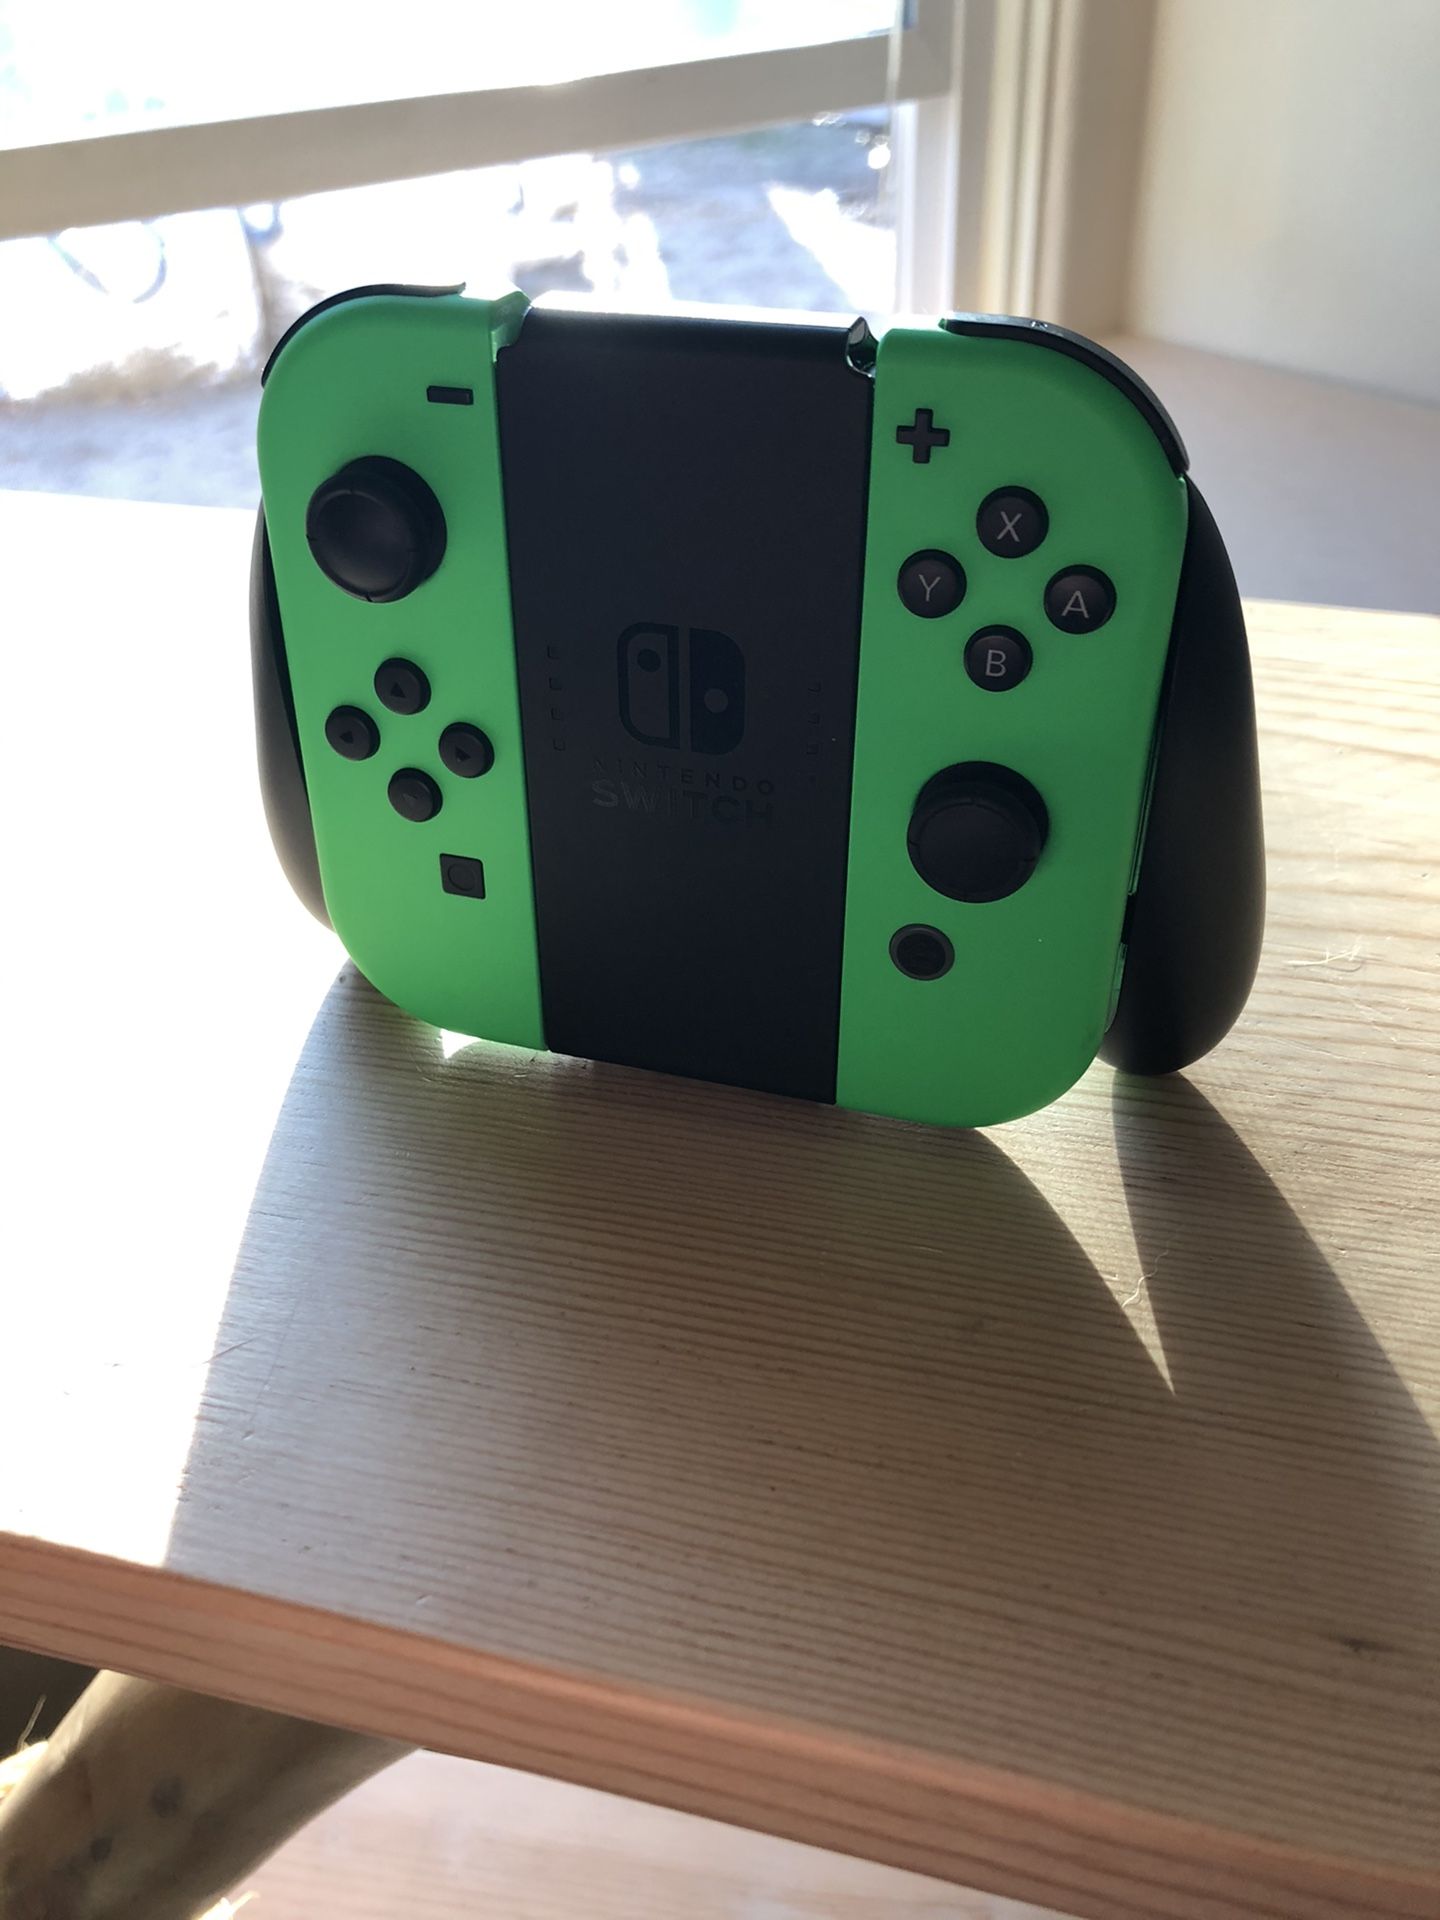 Green Joy-Con for Nintendo Switch